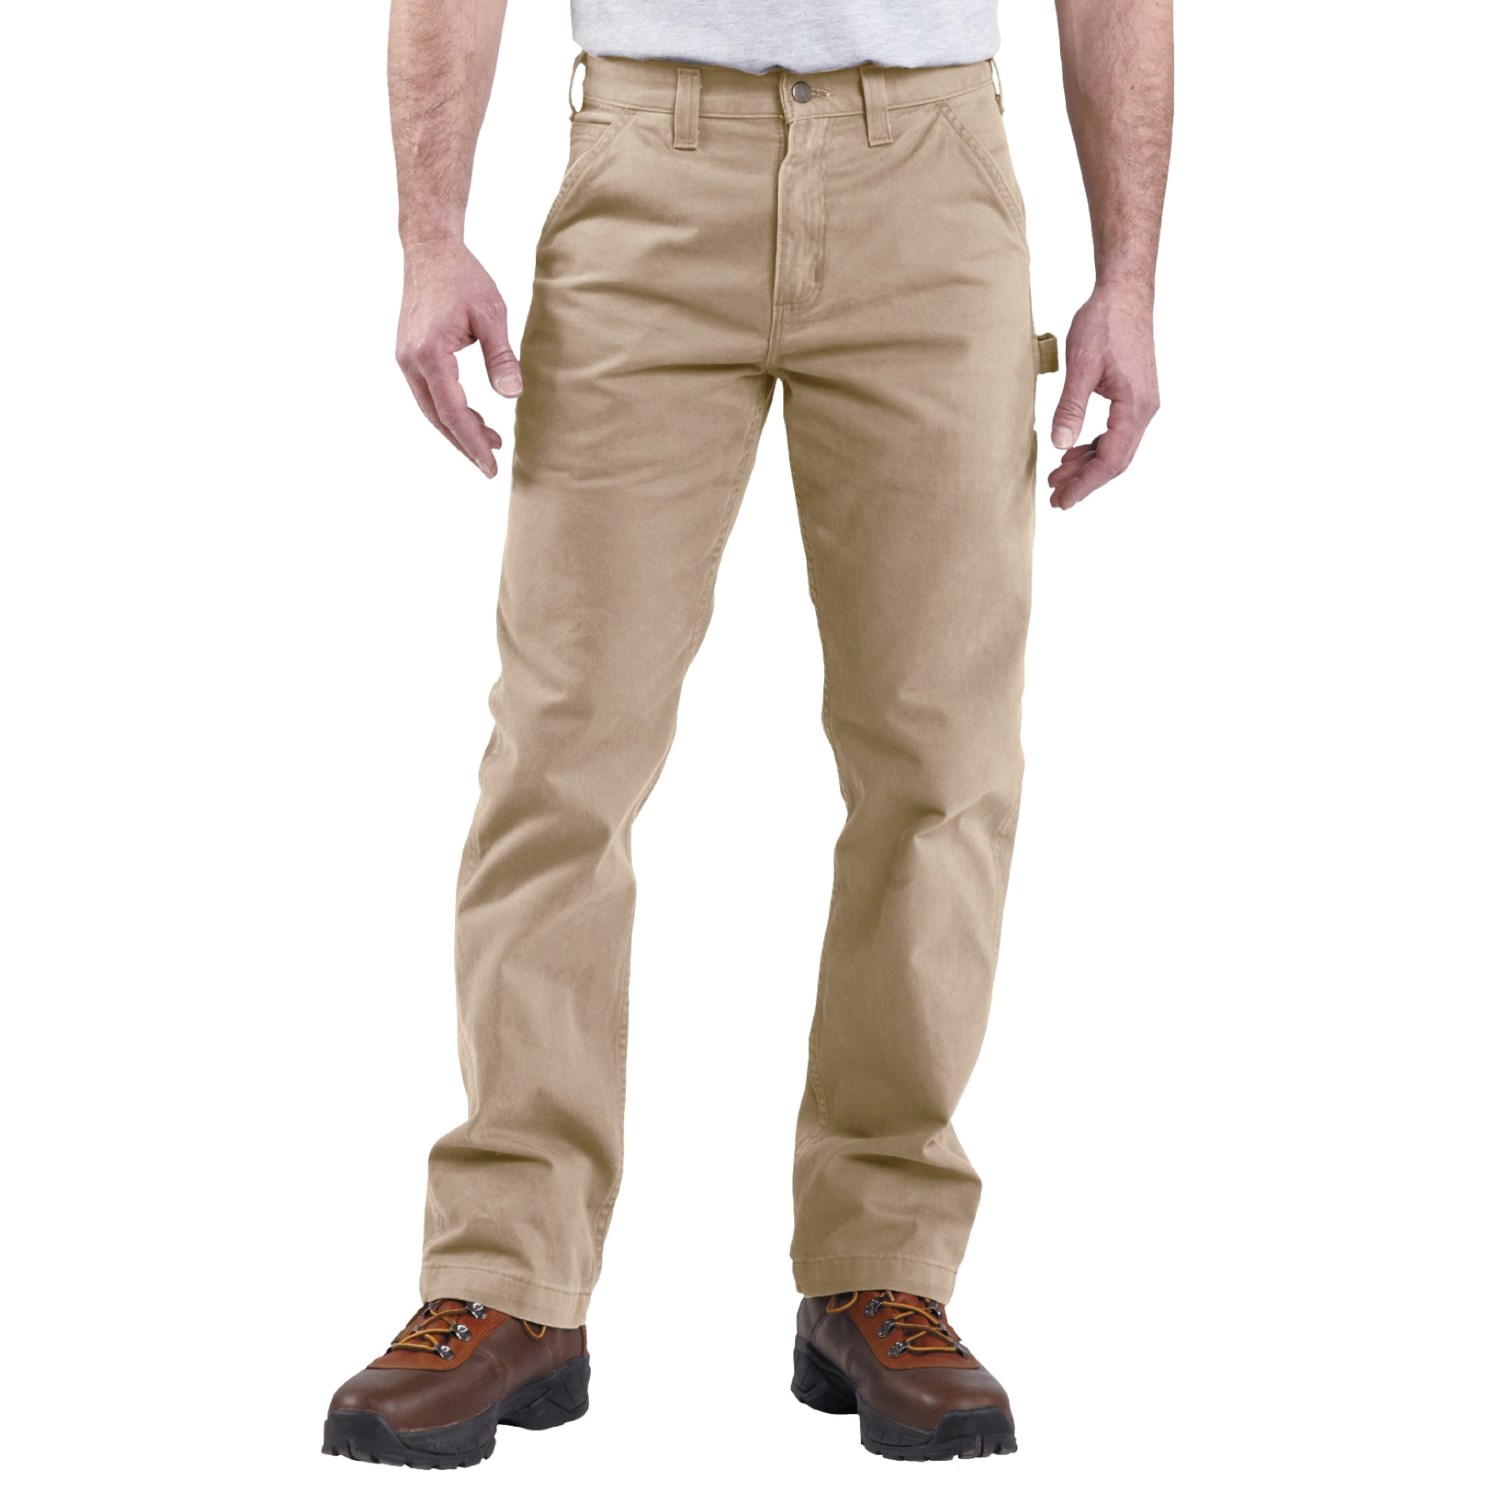 khaki work pants - Pi Pants